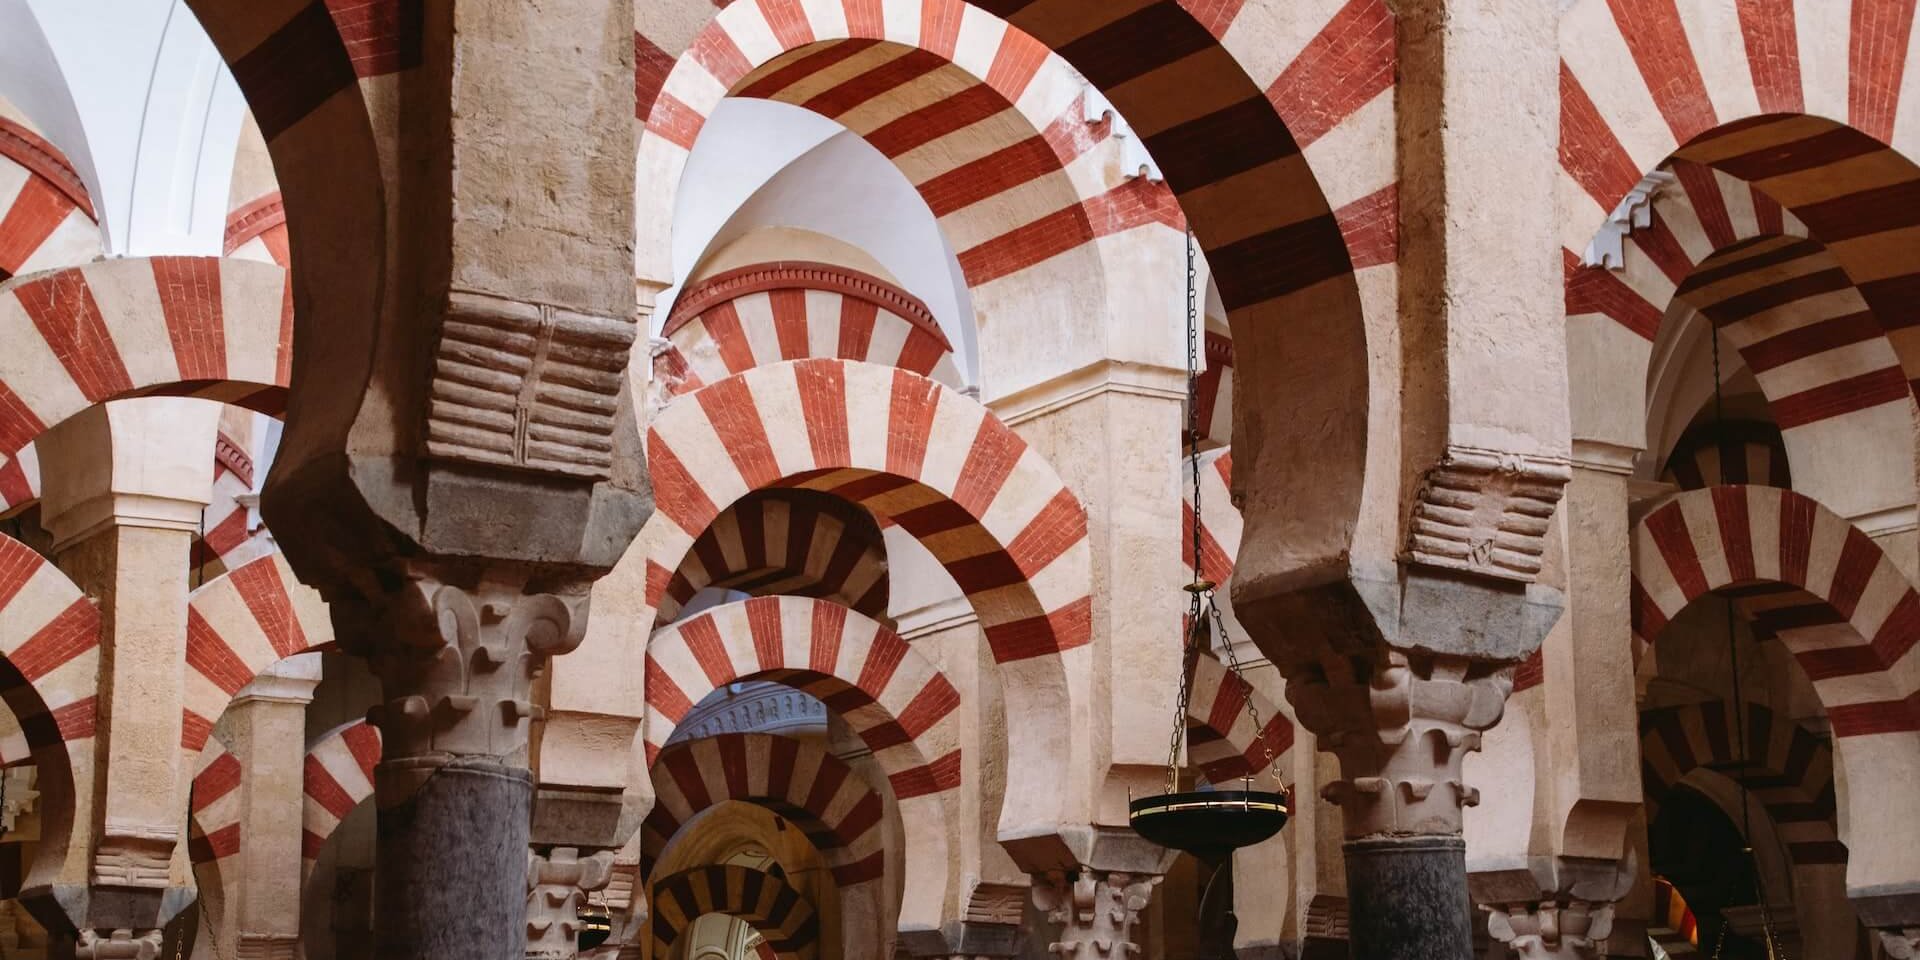 Mezquita Catedral of Córdoba, Spain - pillars